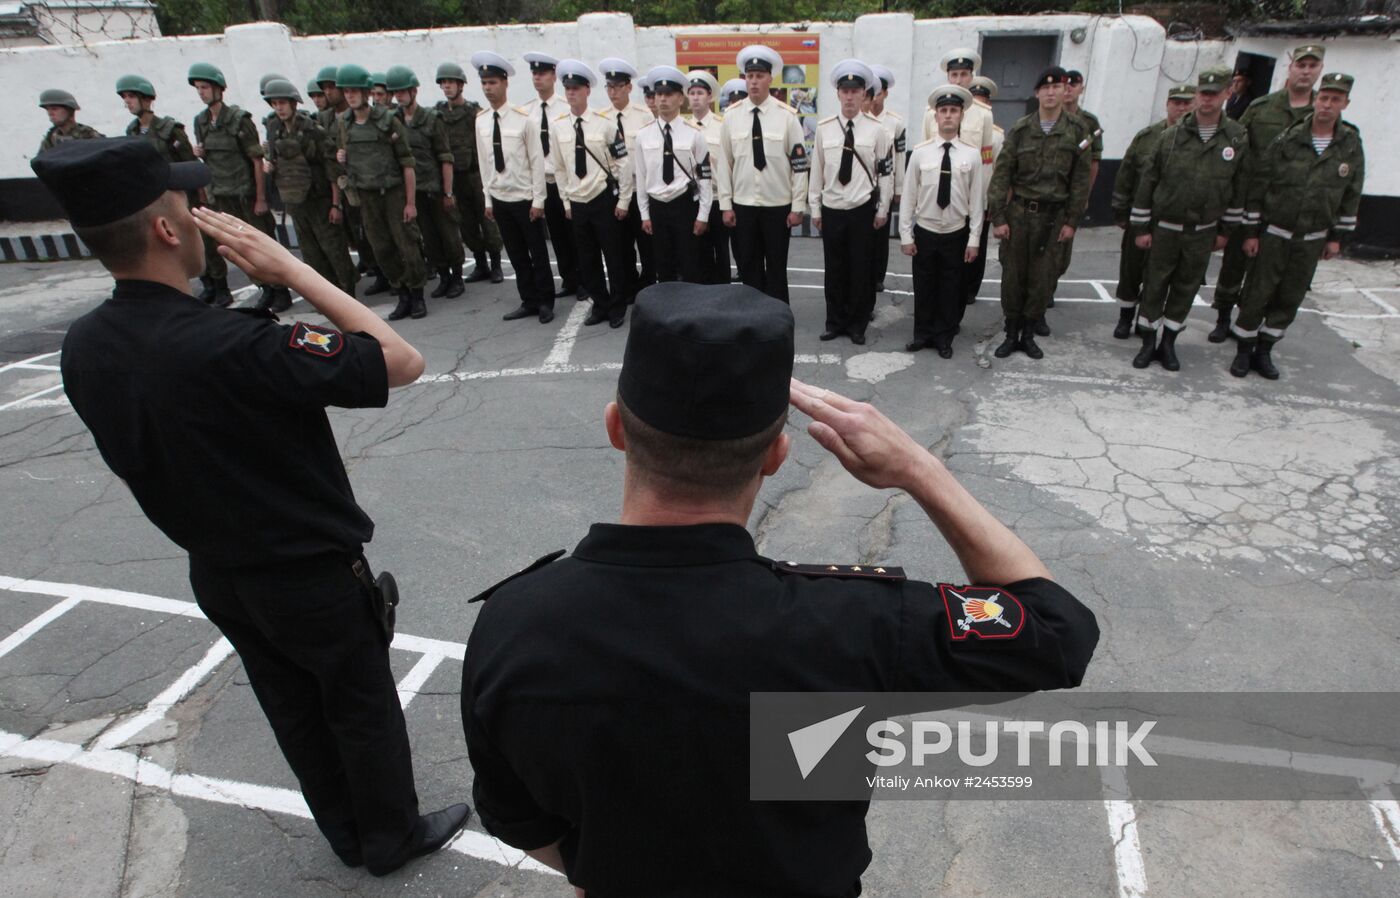 Military police force of the Vladivostok garrison